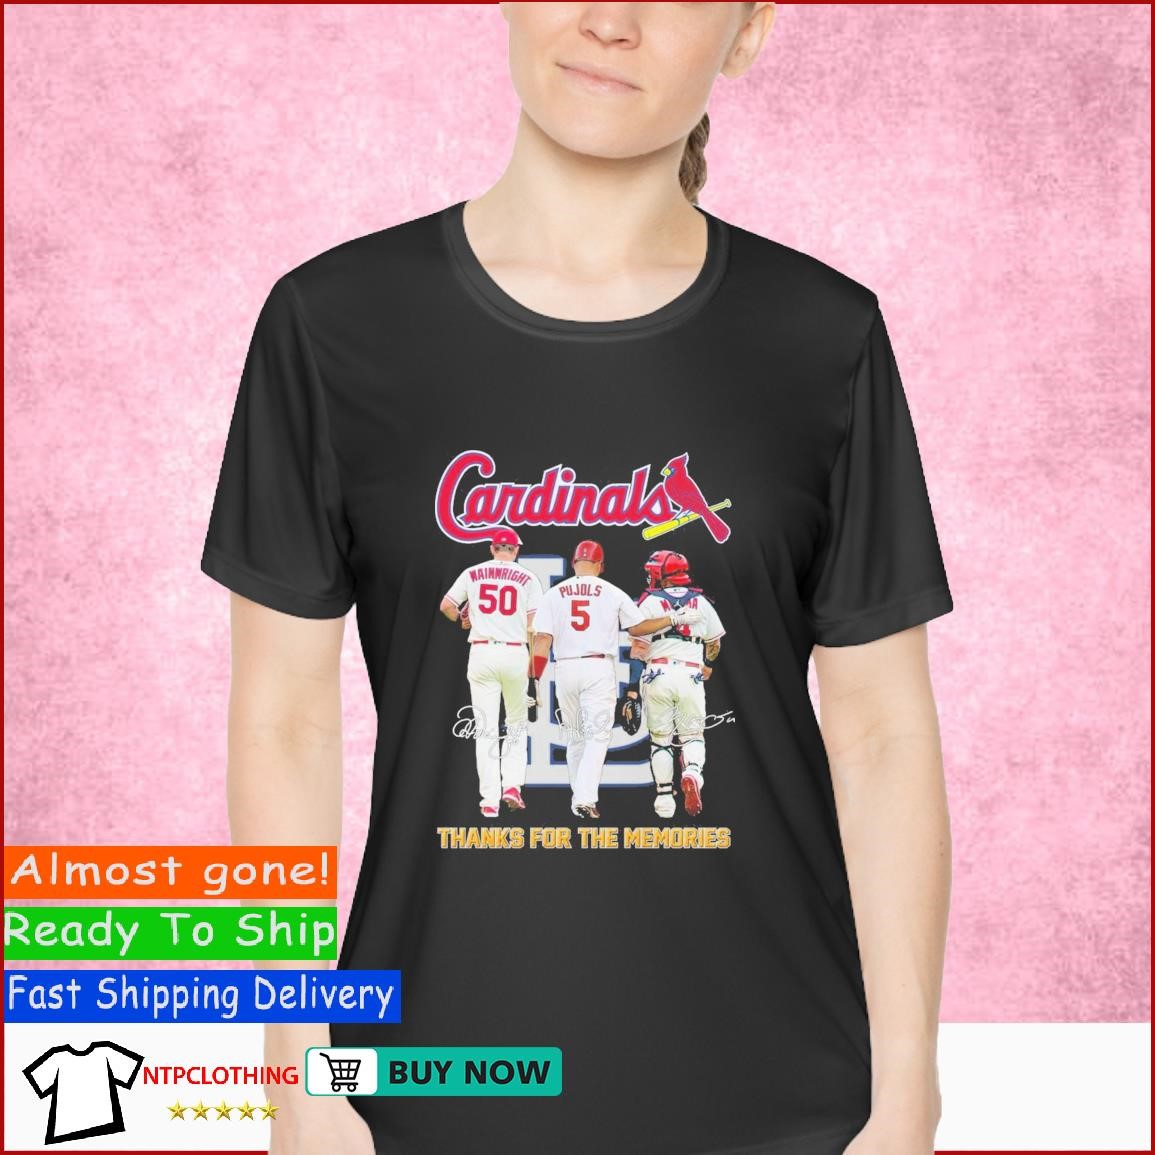 albert pujols cardinals t shirt